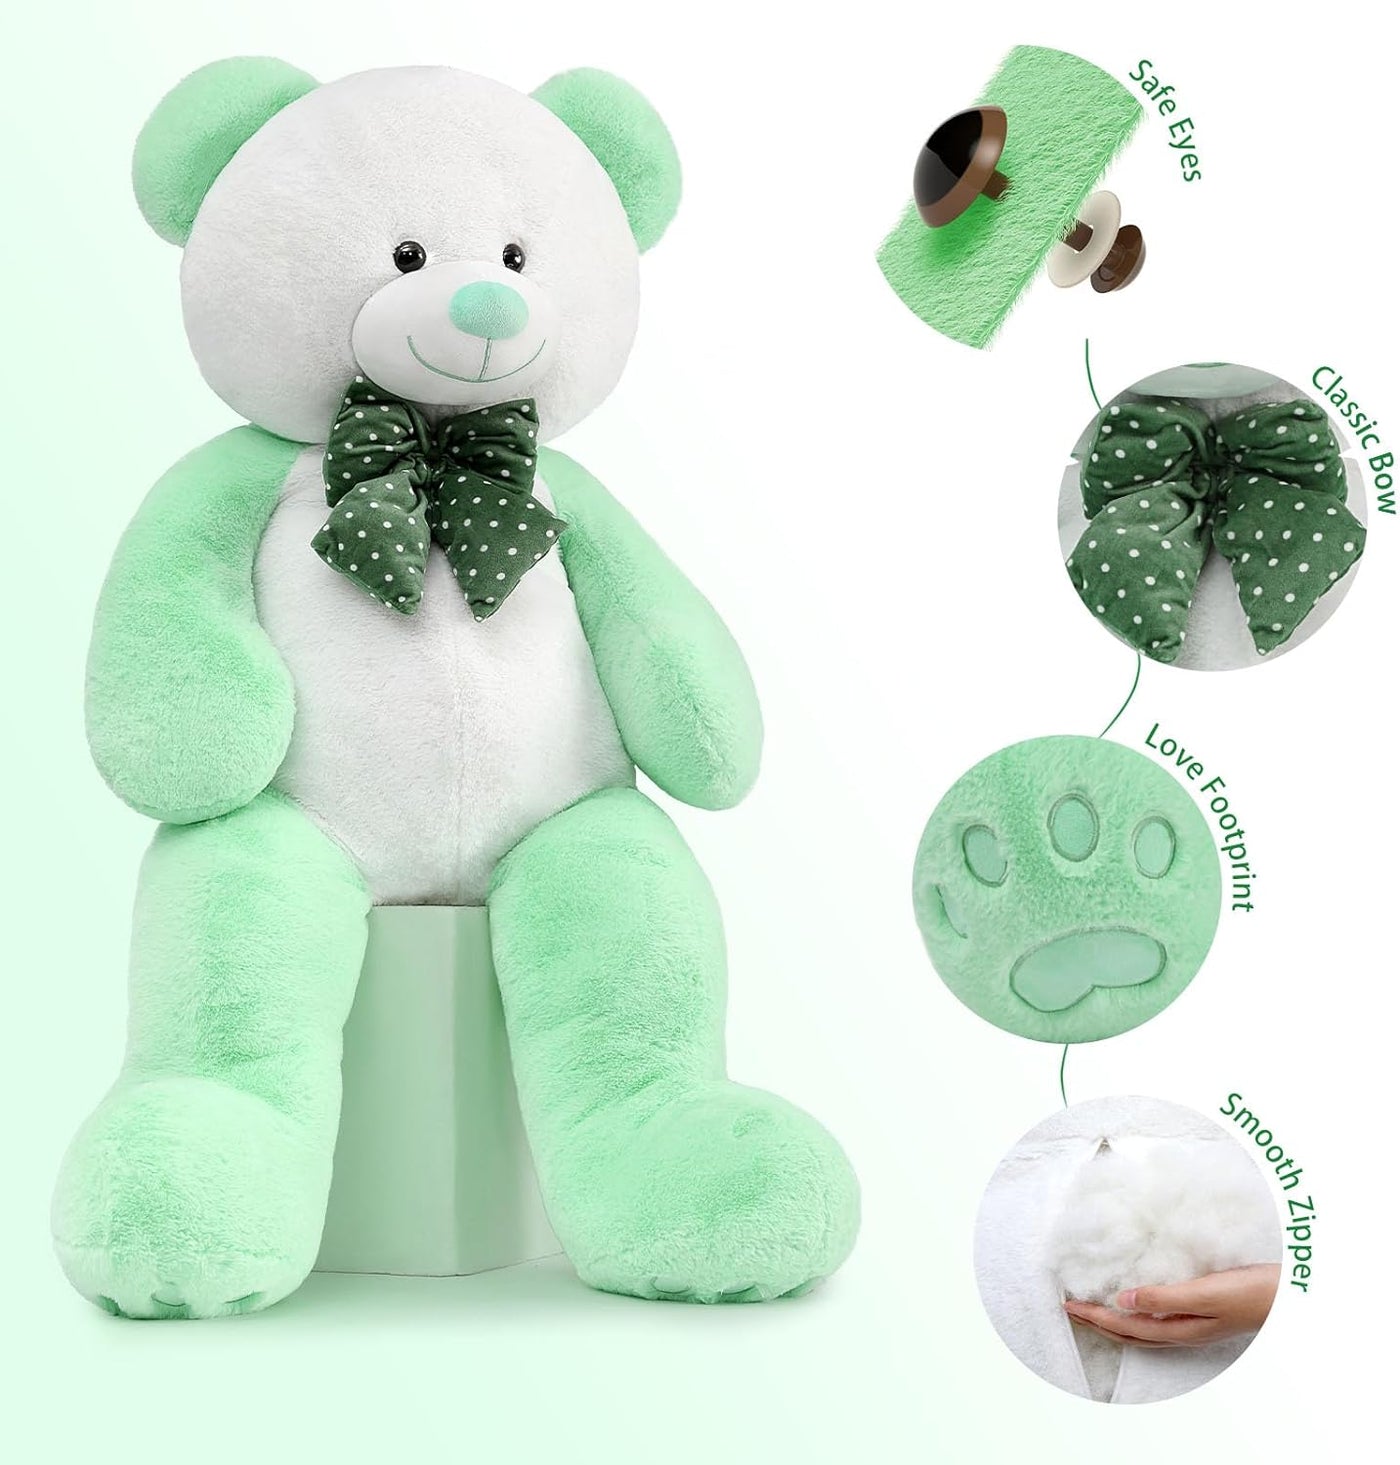 Giant Splicing Teddy Bear Plush Toy, 47 Inches